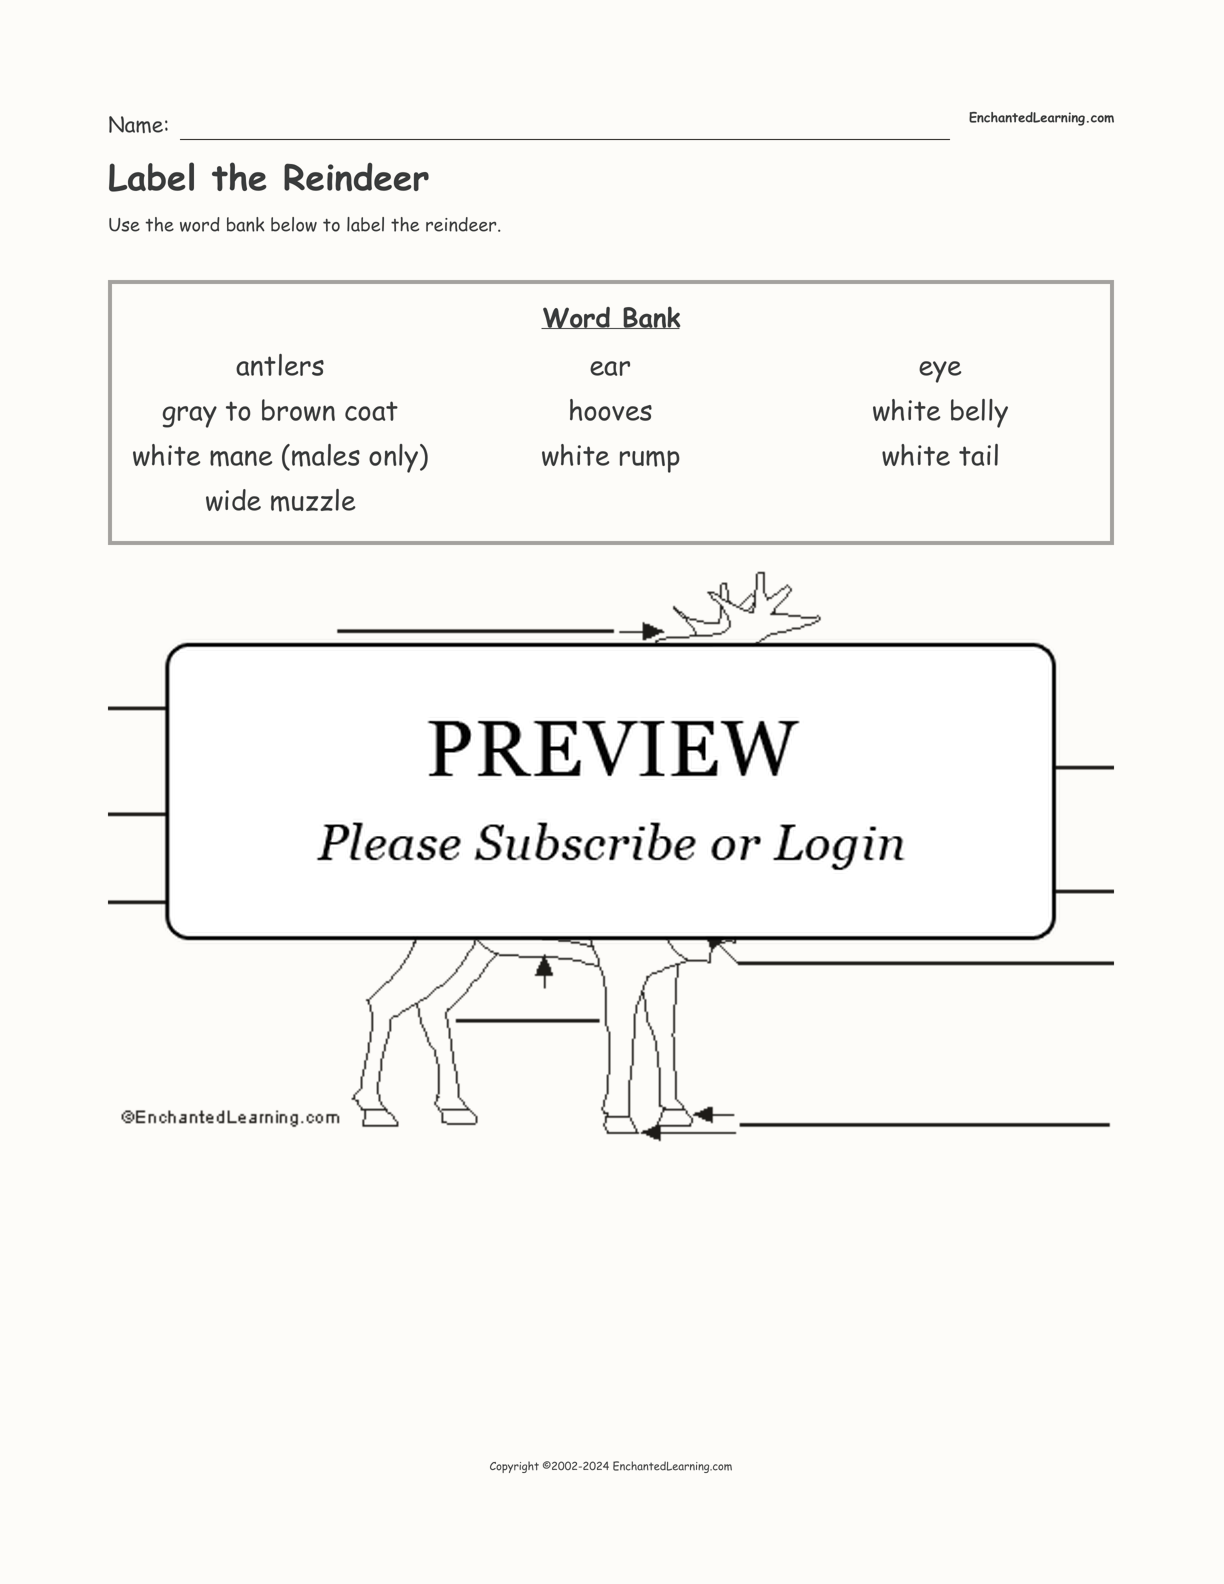 Label the Reindeer interactive worksheet page 1